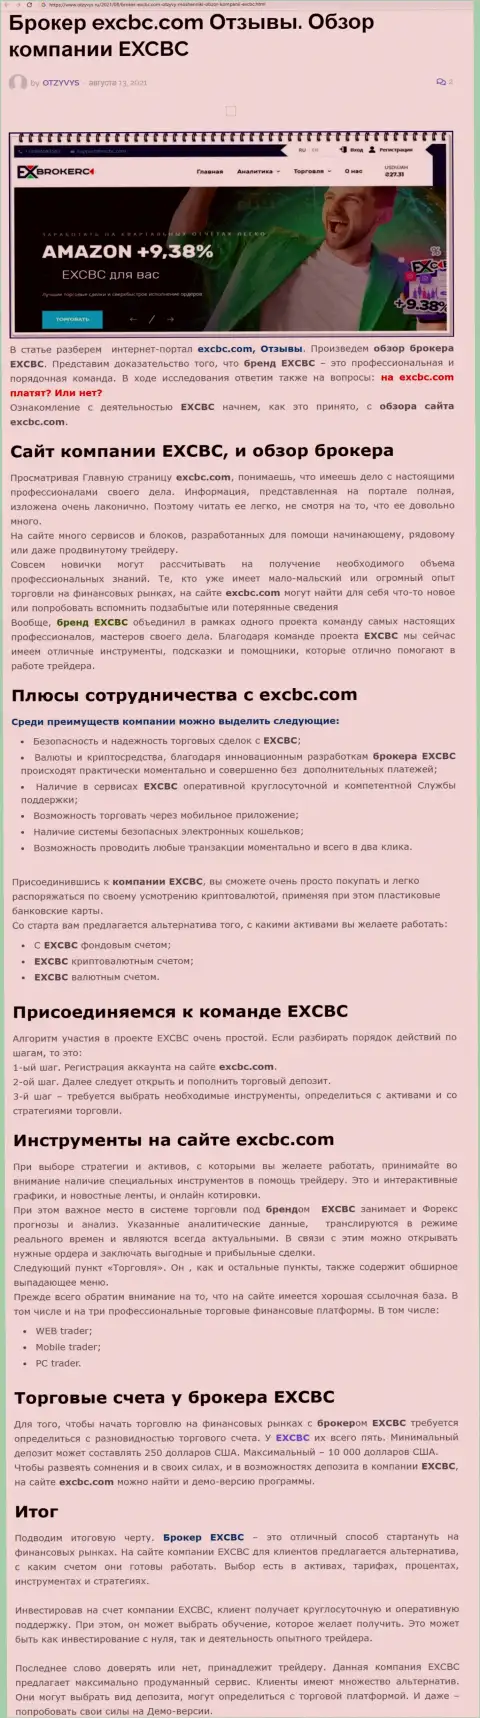 Публикация об Форекс брокерской компании EXCBC на веб-сервисе Отзывс Ру